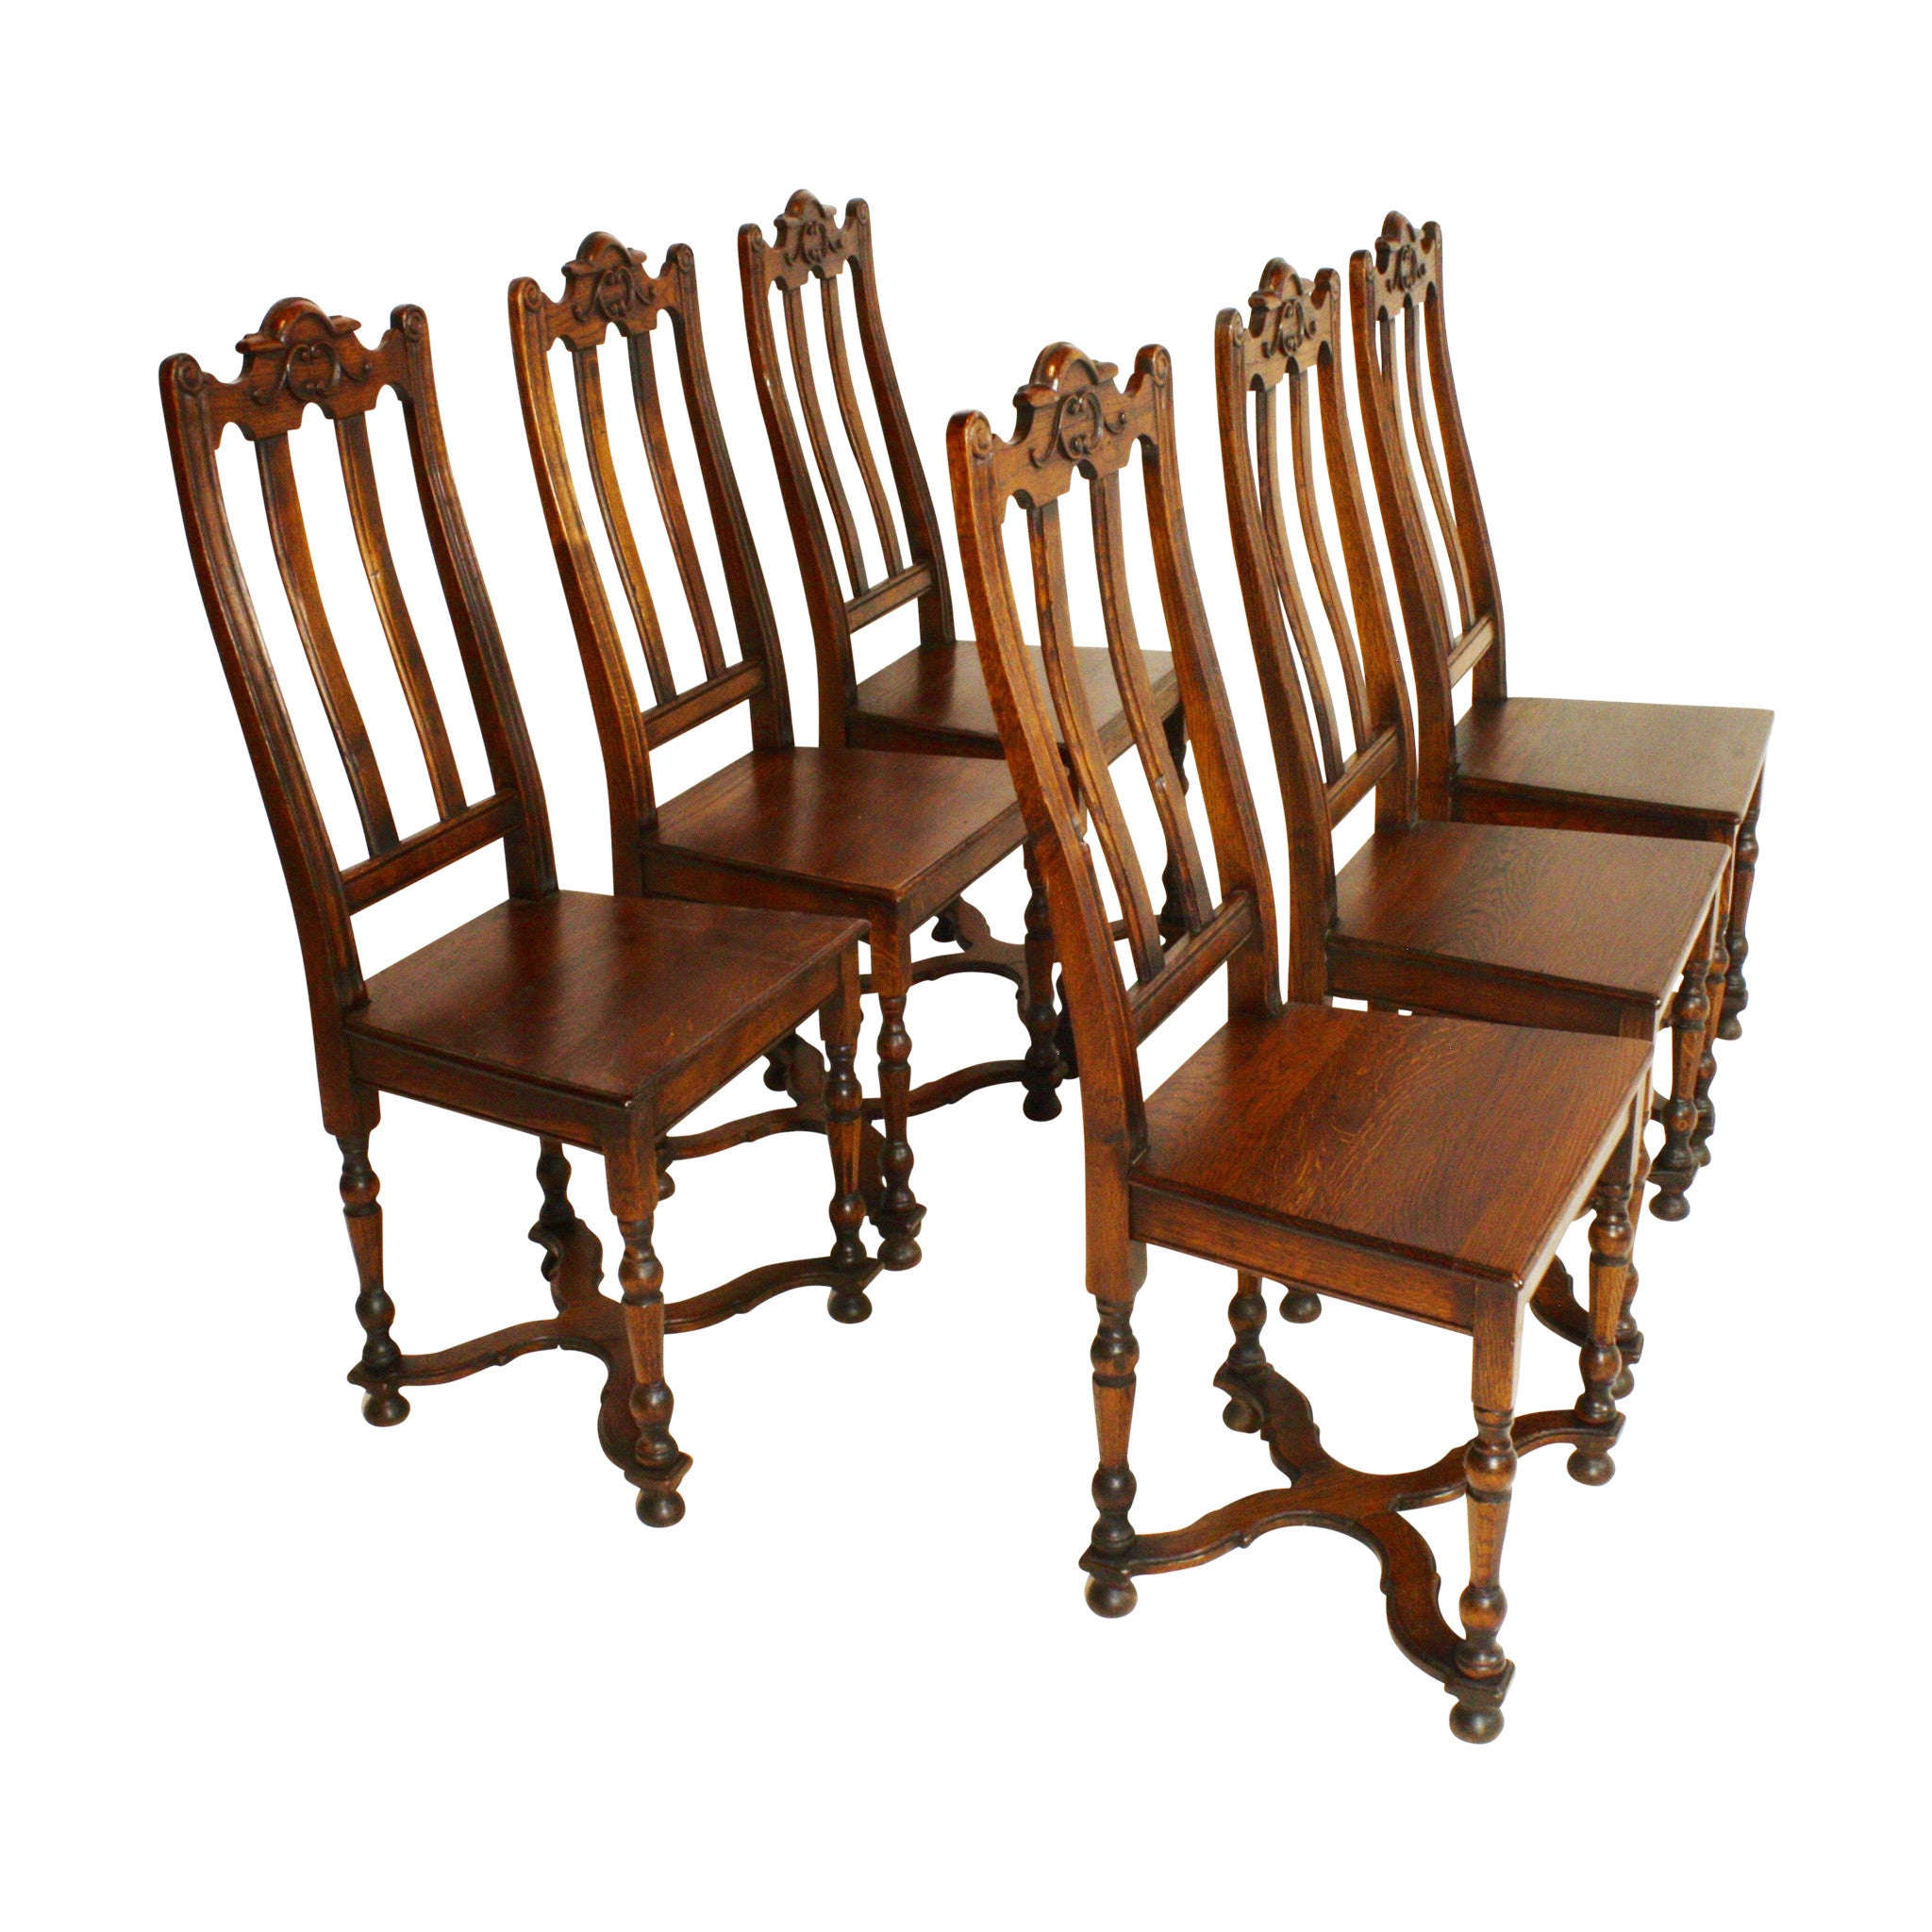 ski-country-antiques - Dutch Chairs